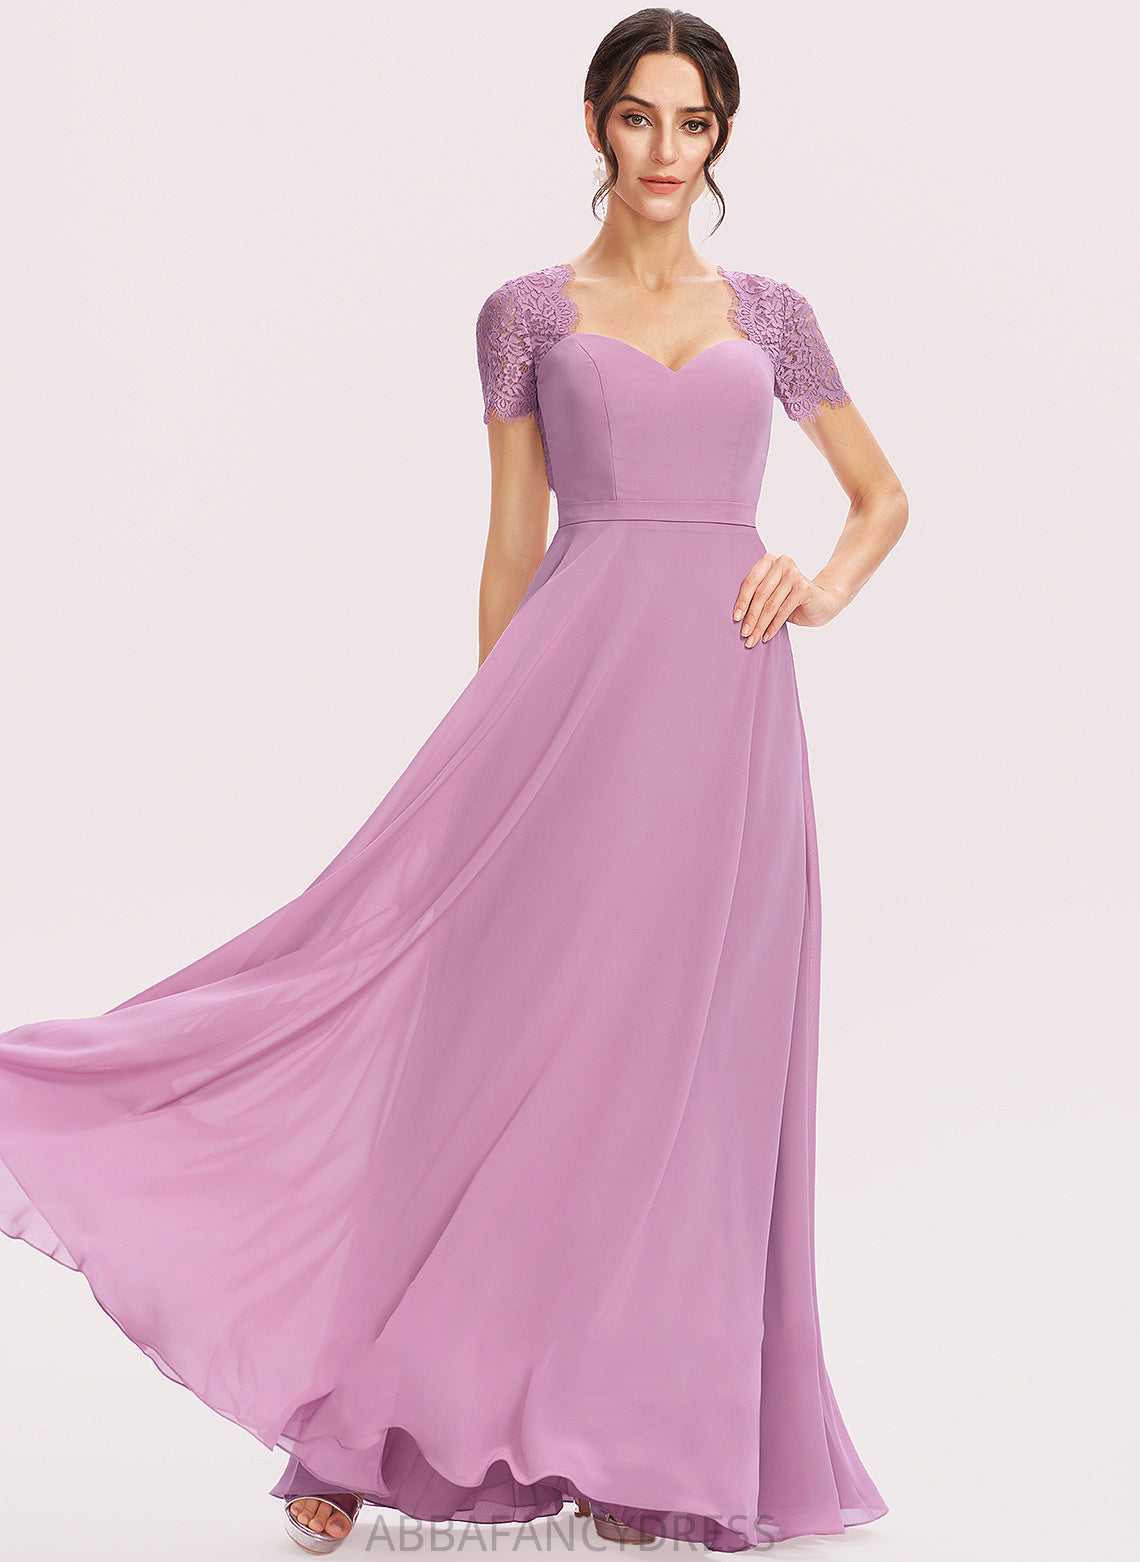 Embellishment Lace Fabric Silhouette A-Line Sweetheart Neckline Straps Sabrina A-Line/Princess V-Neck Floor Length